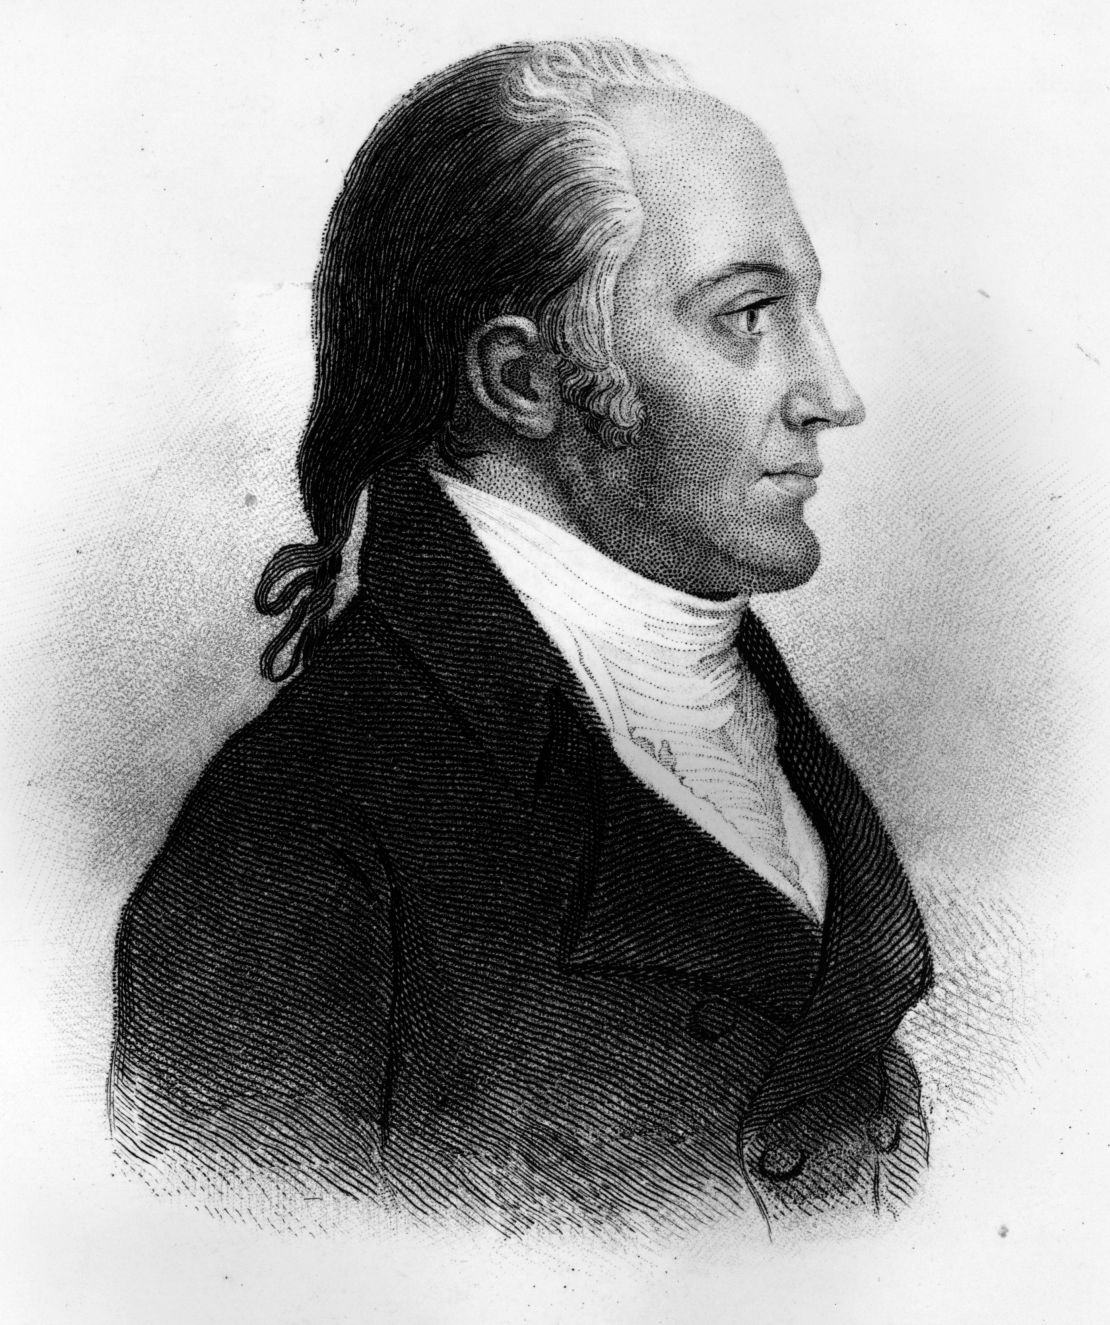 Vice President Aaron Burr killed Alexander Hamilton in a duel in 1804. 